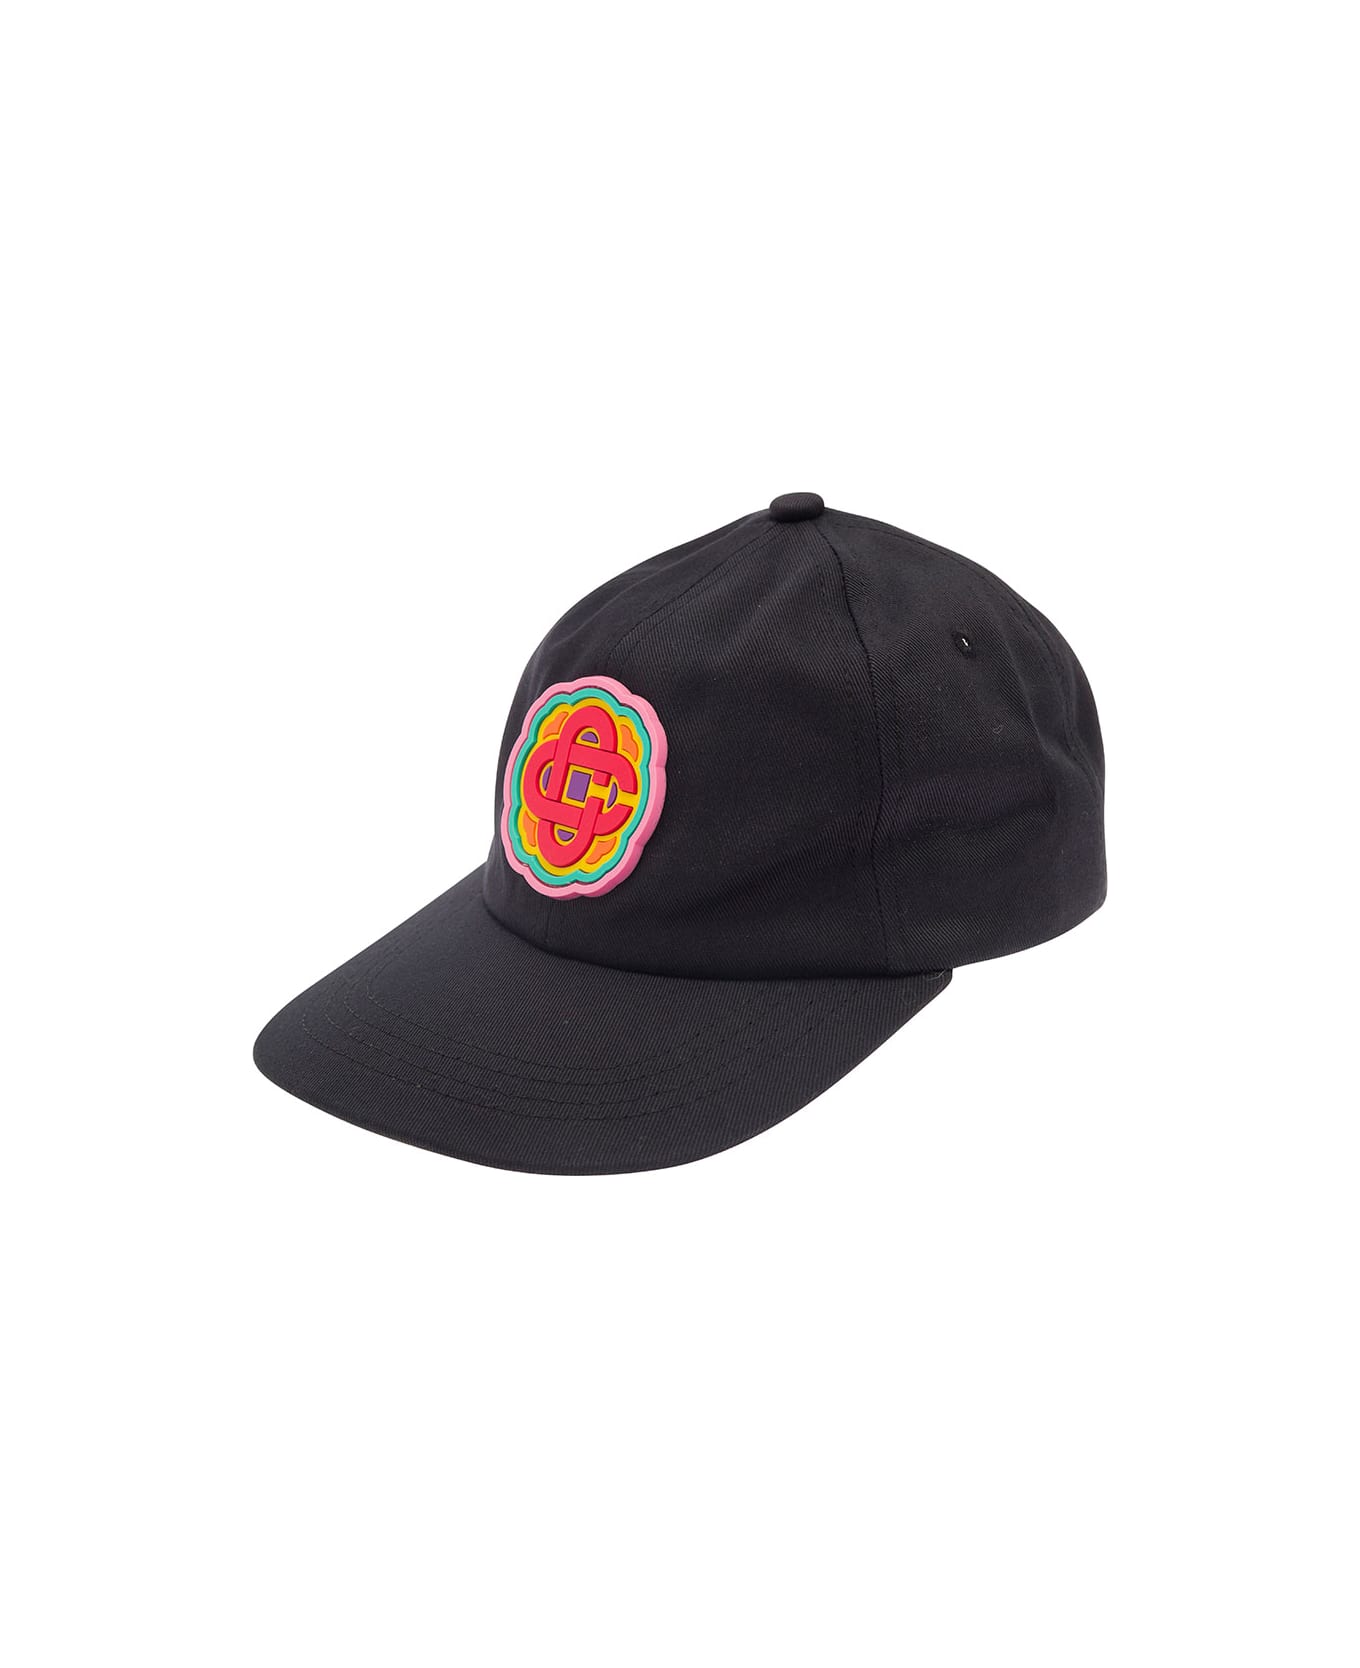 Casablanca Black Baseball Cap With Logo Patch In Cotton Man - Black